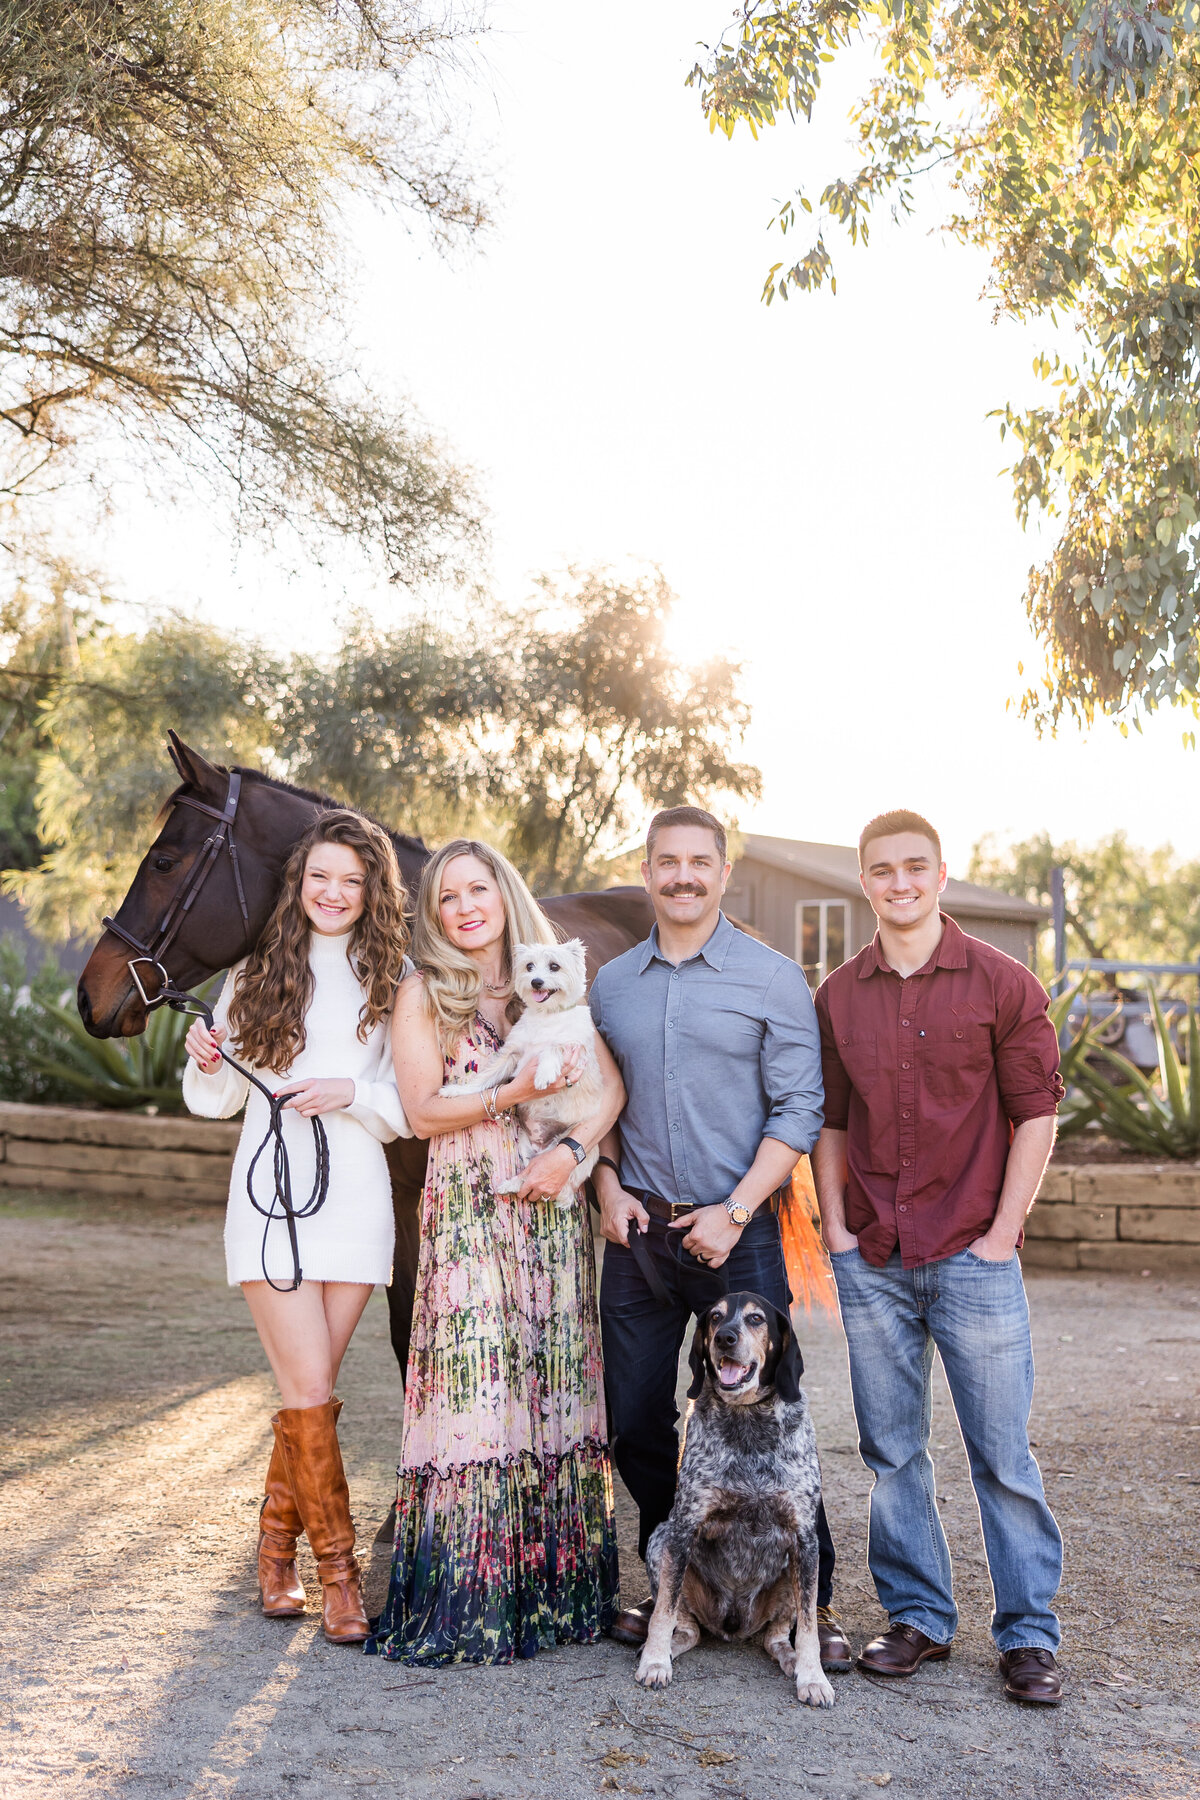 Family-Equestrian-Photoshoot-Bonita-san-diego-with-dogs